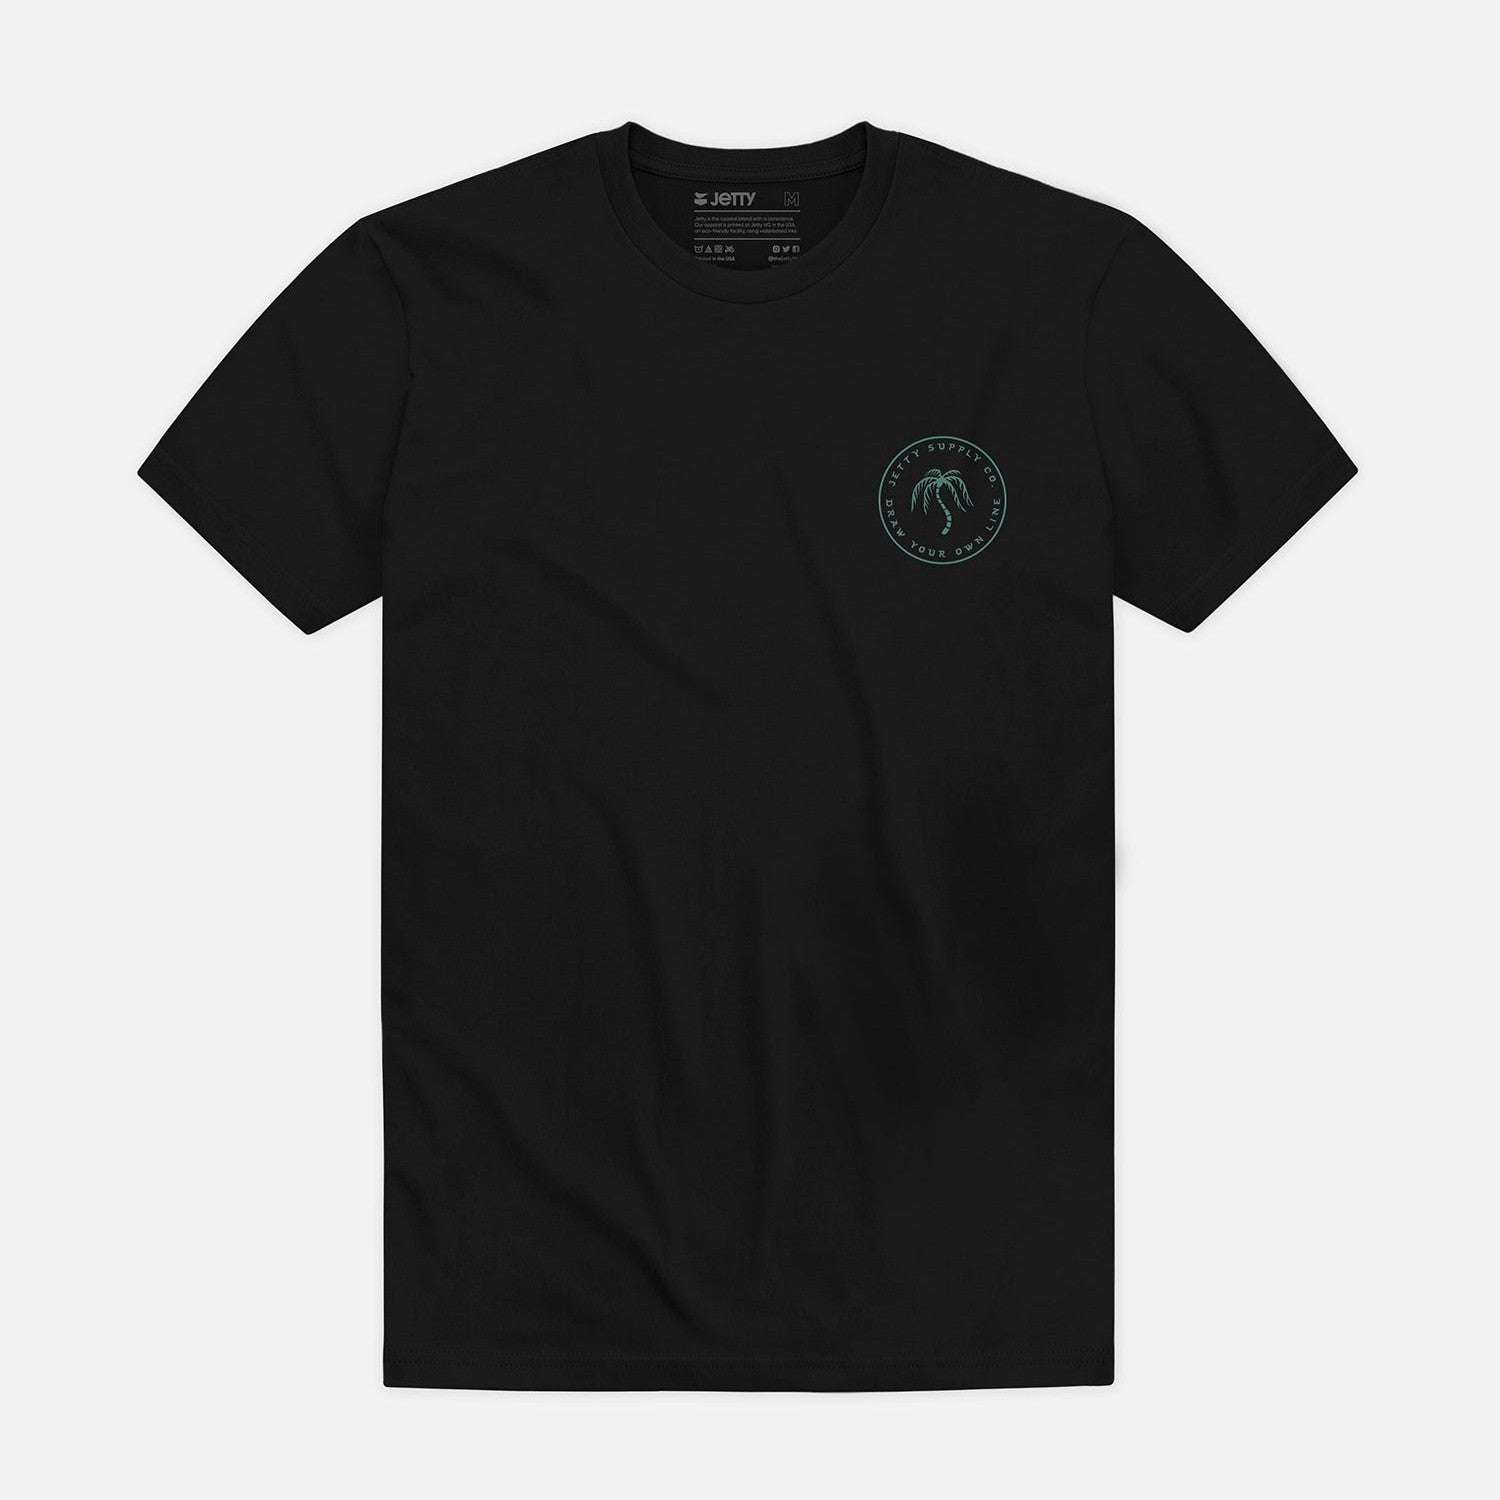 Jetty Squall T-Shirt